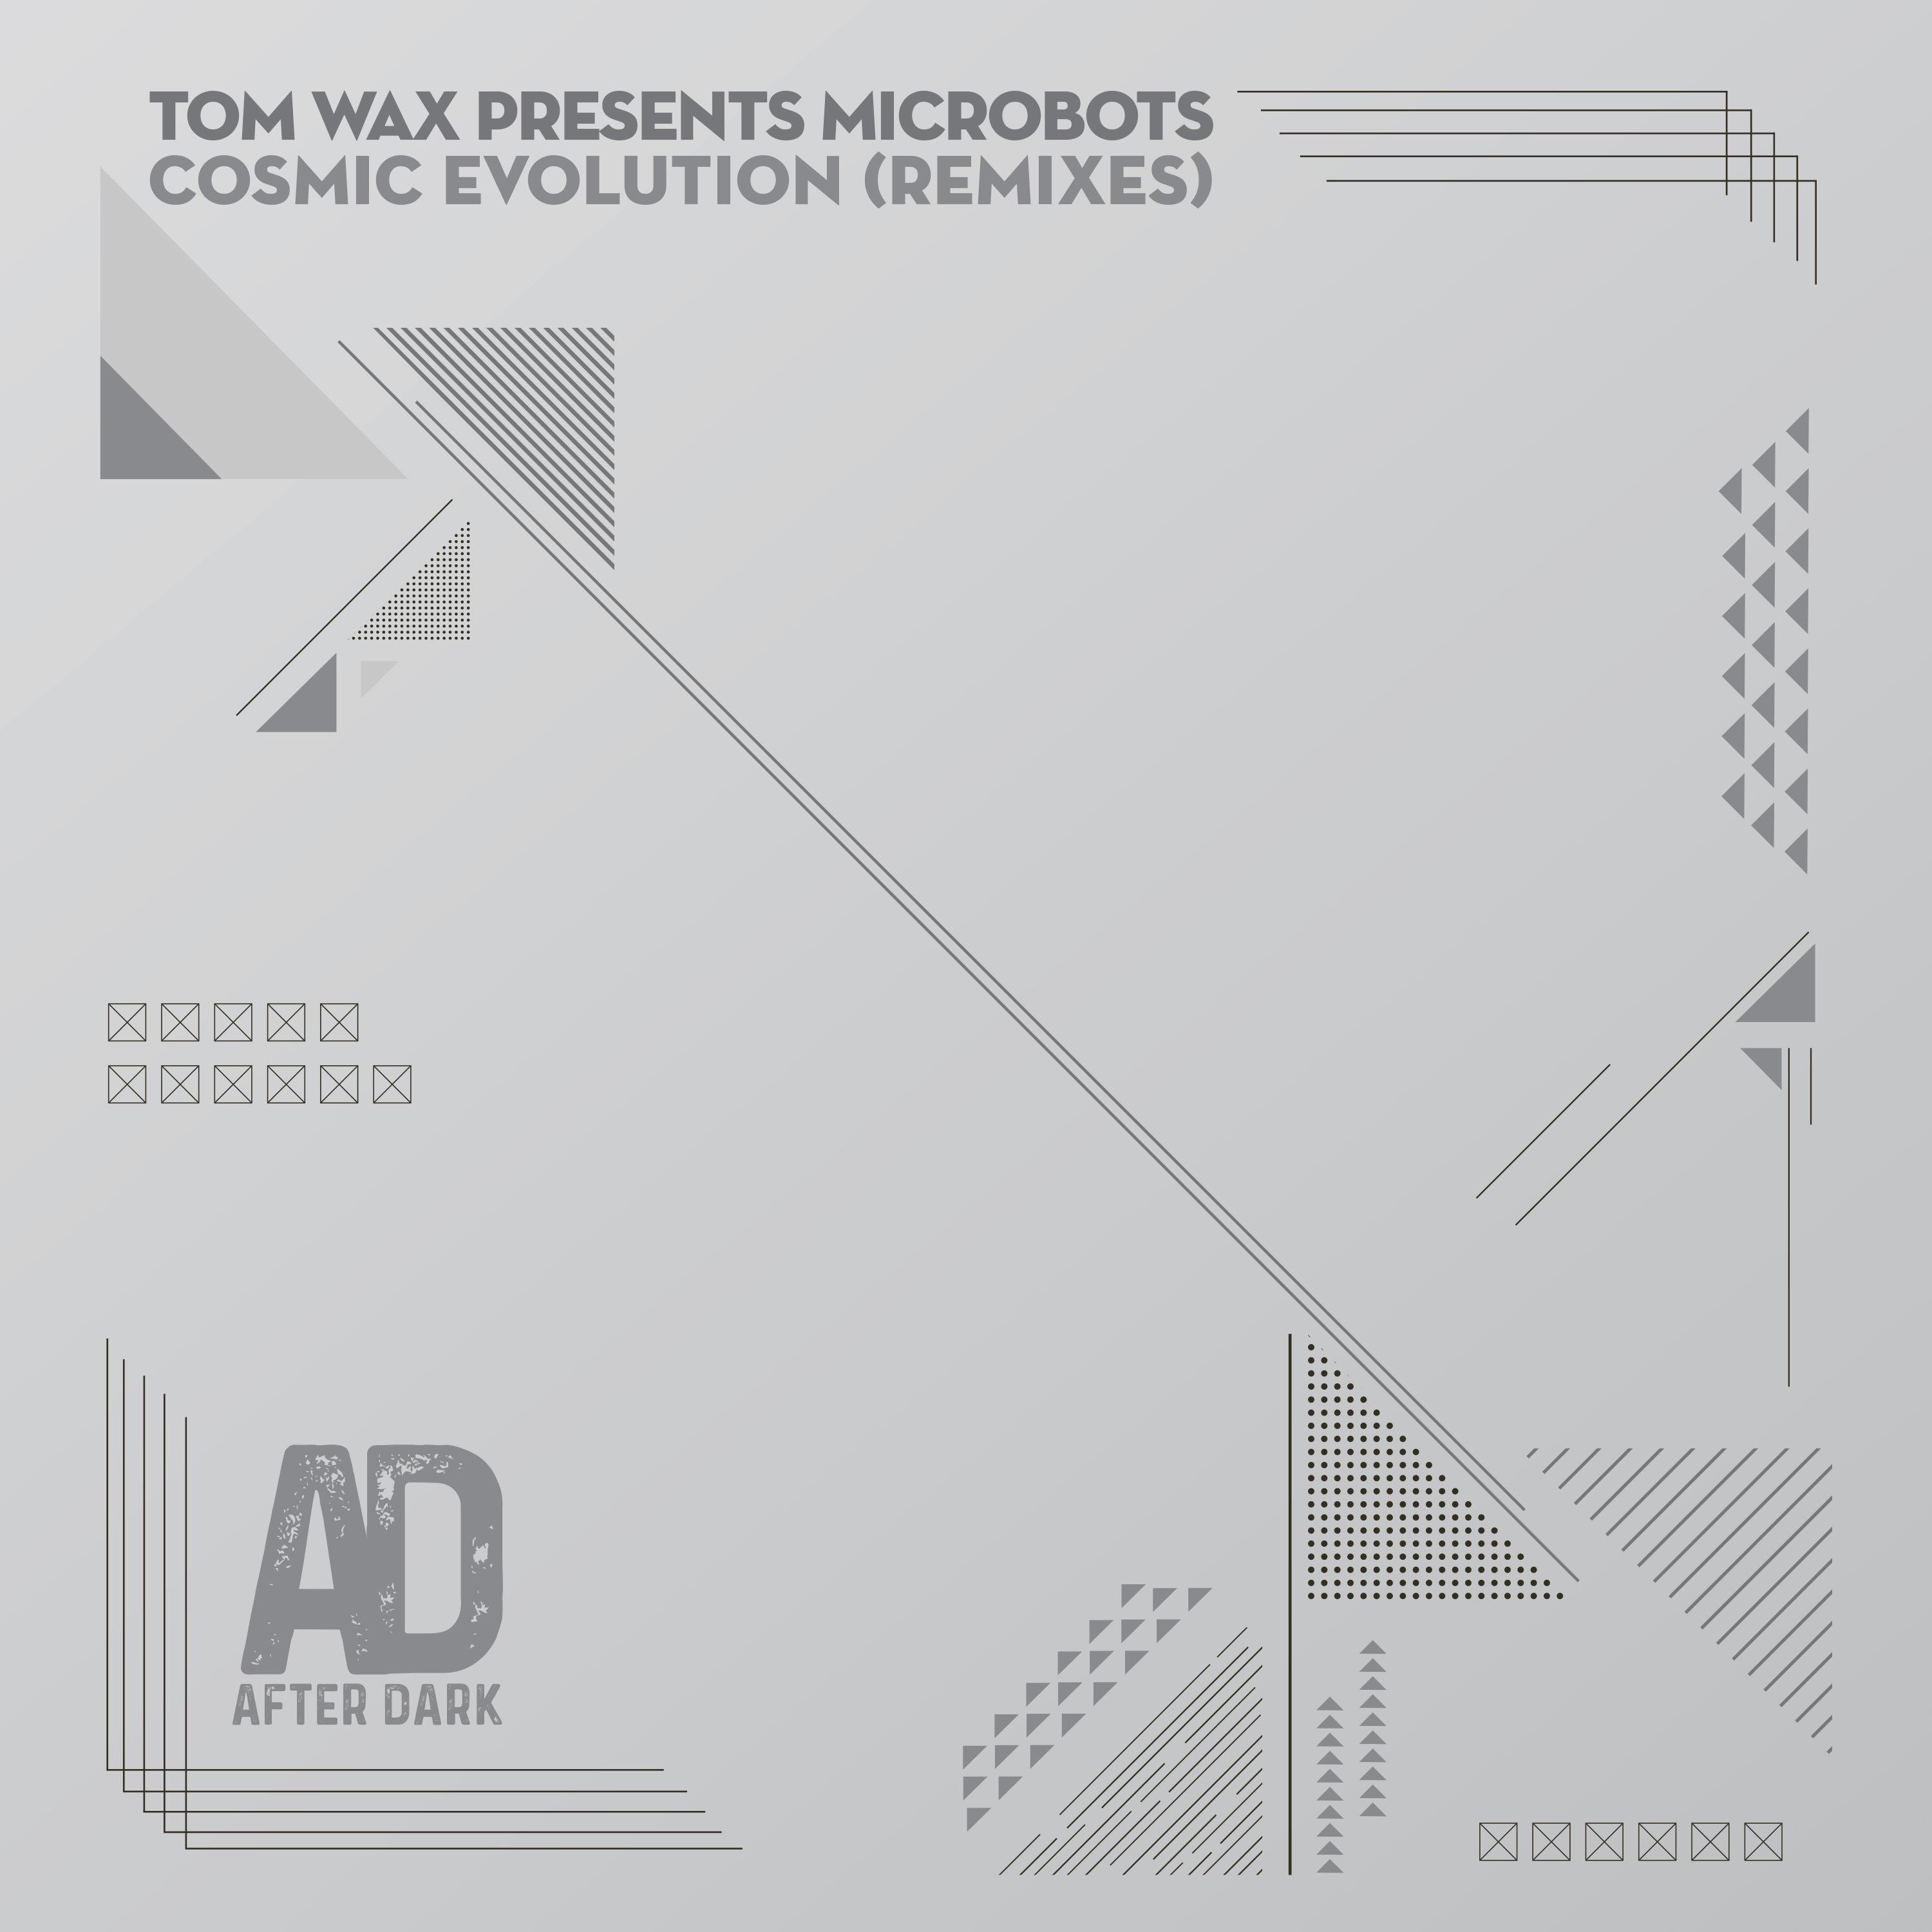 Tom Wax presents Microbots - Cosmic Evolution (Drumcomplex Remix)